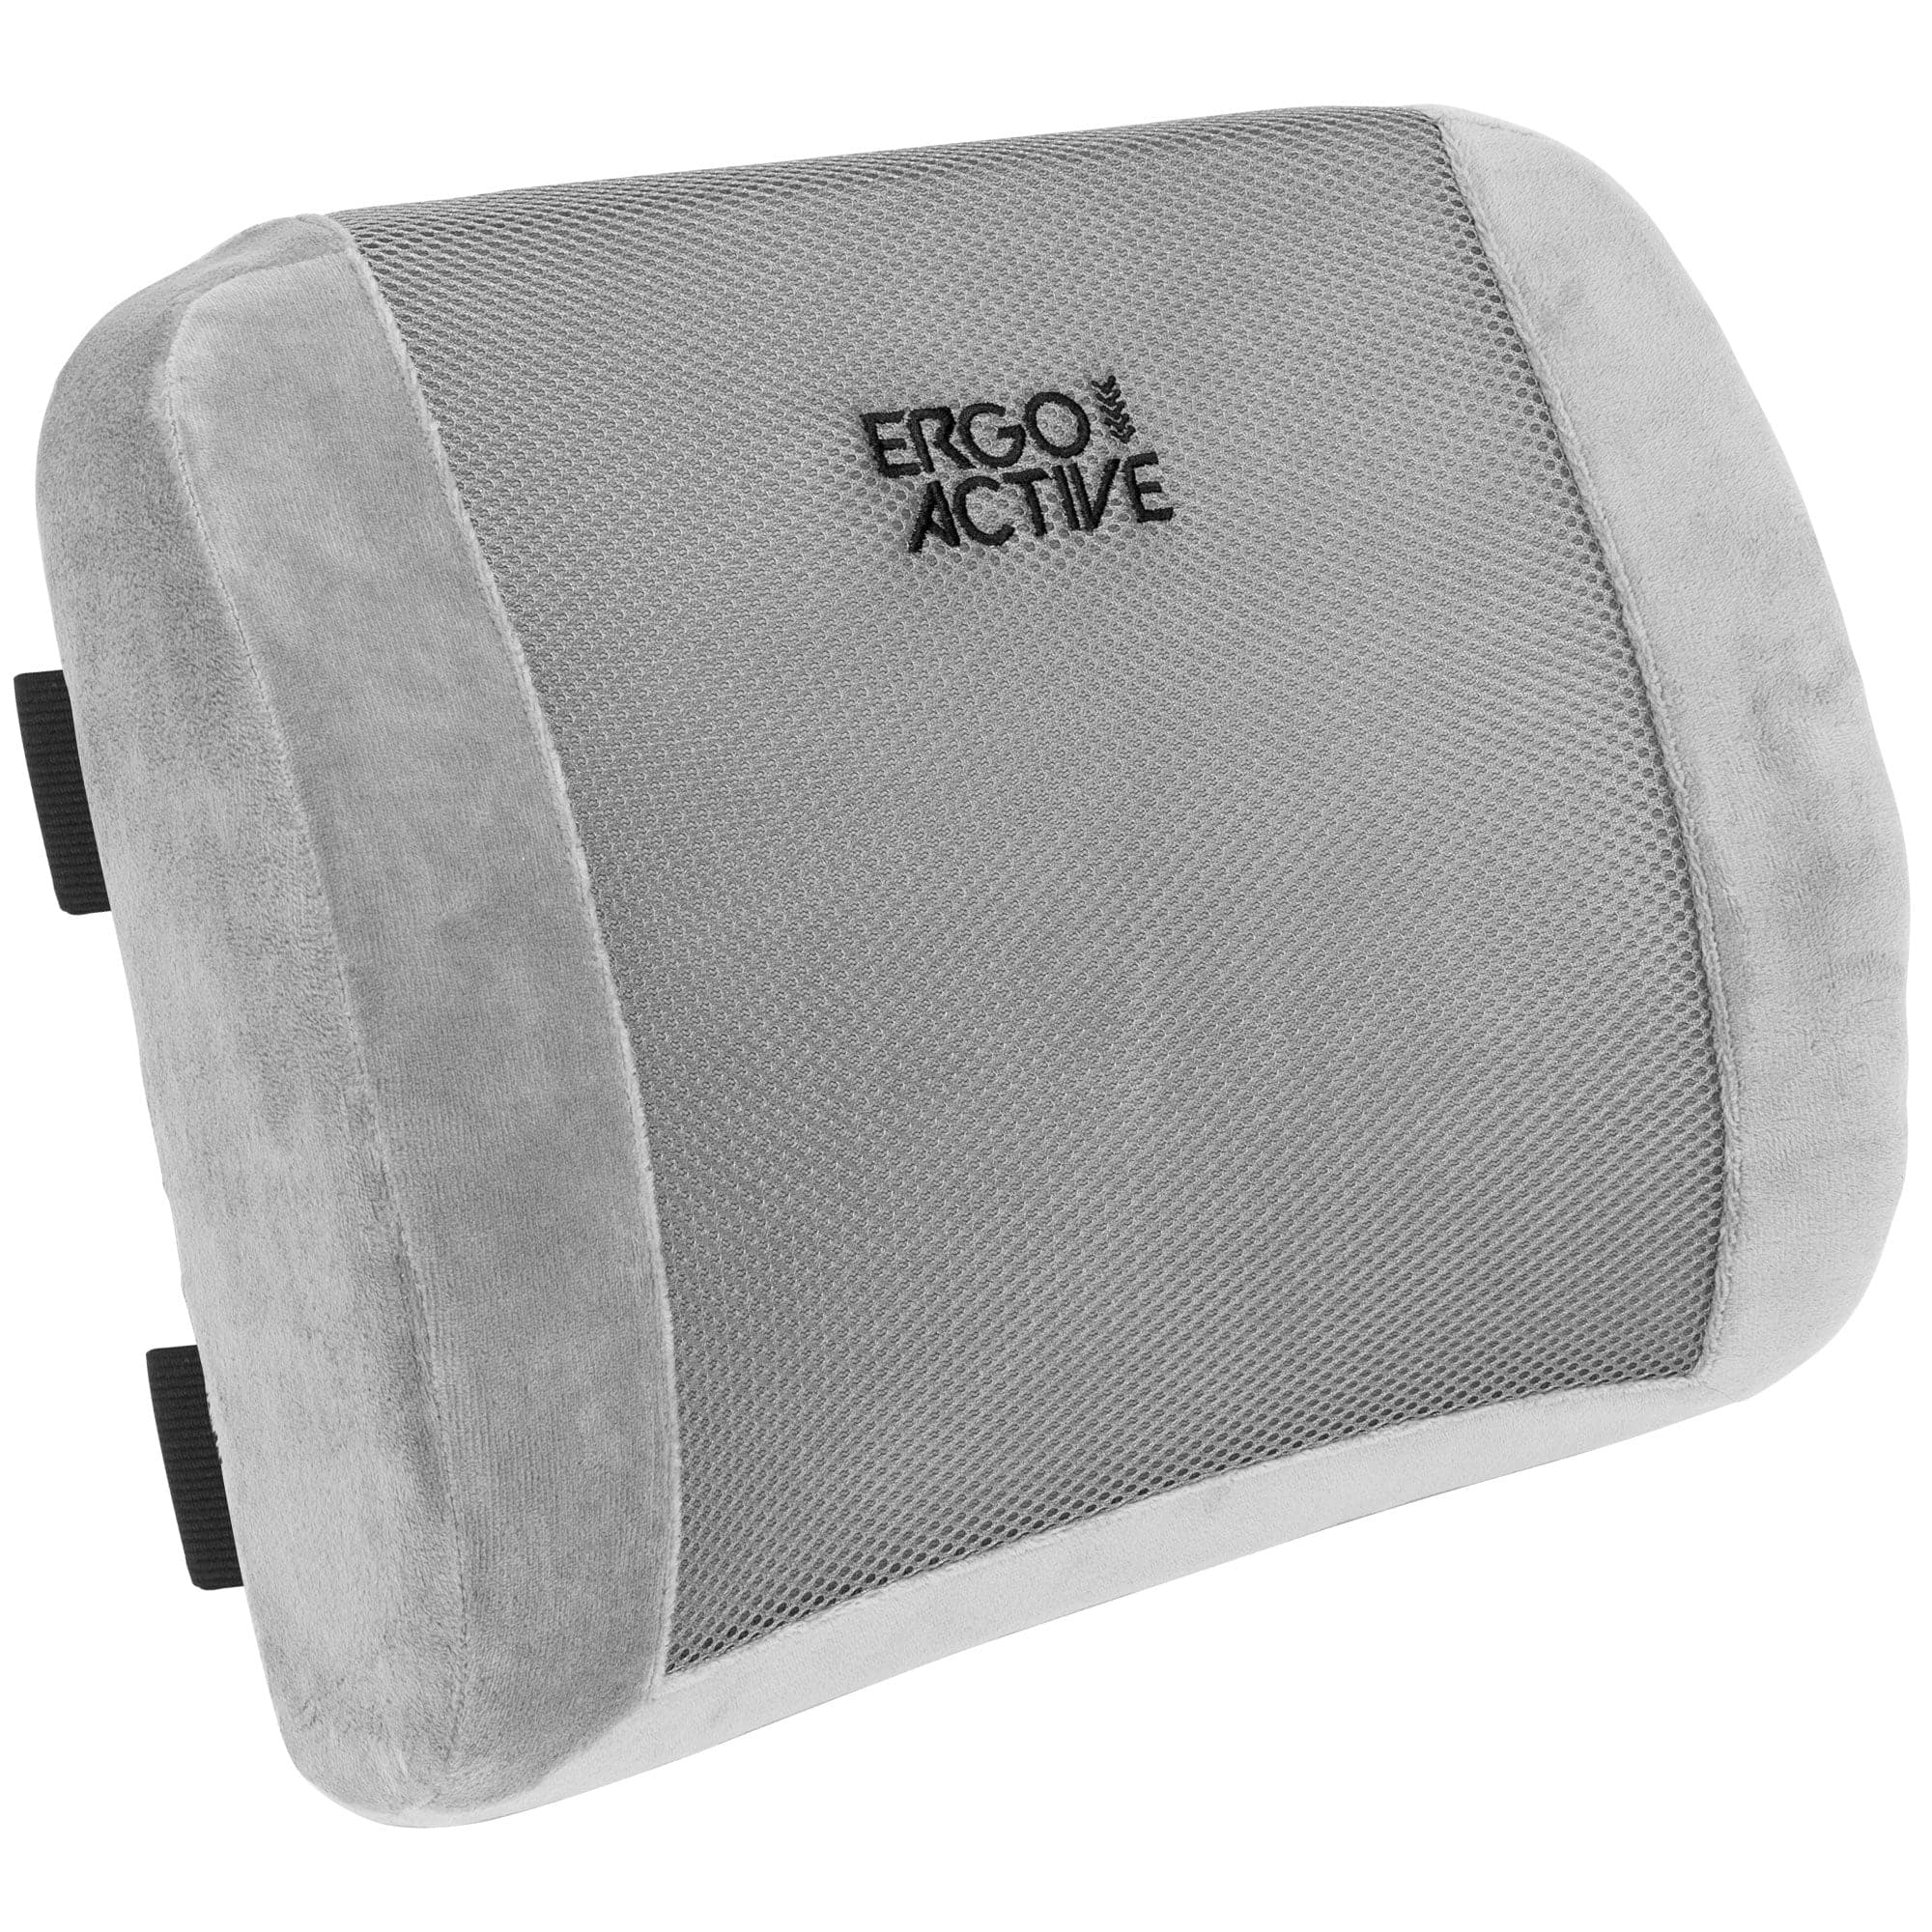 Lumbar Support Pillow, Cool Gel Memory Foam Lower Back Cushion for